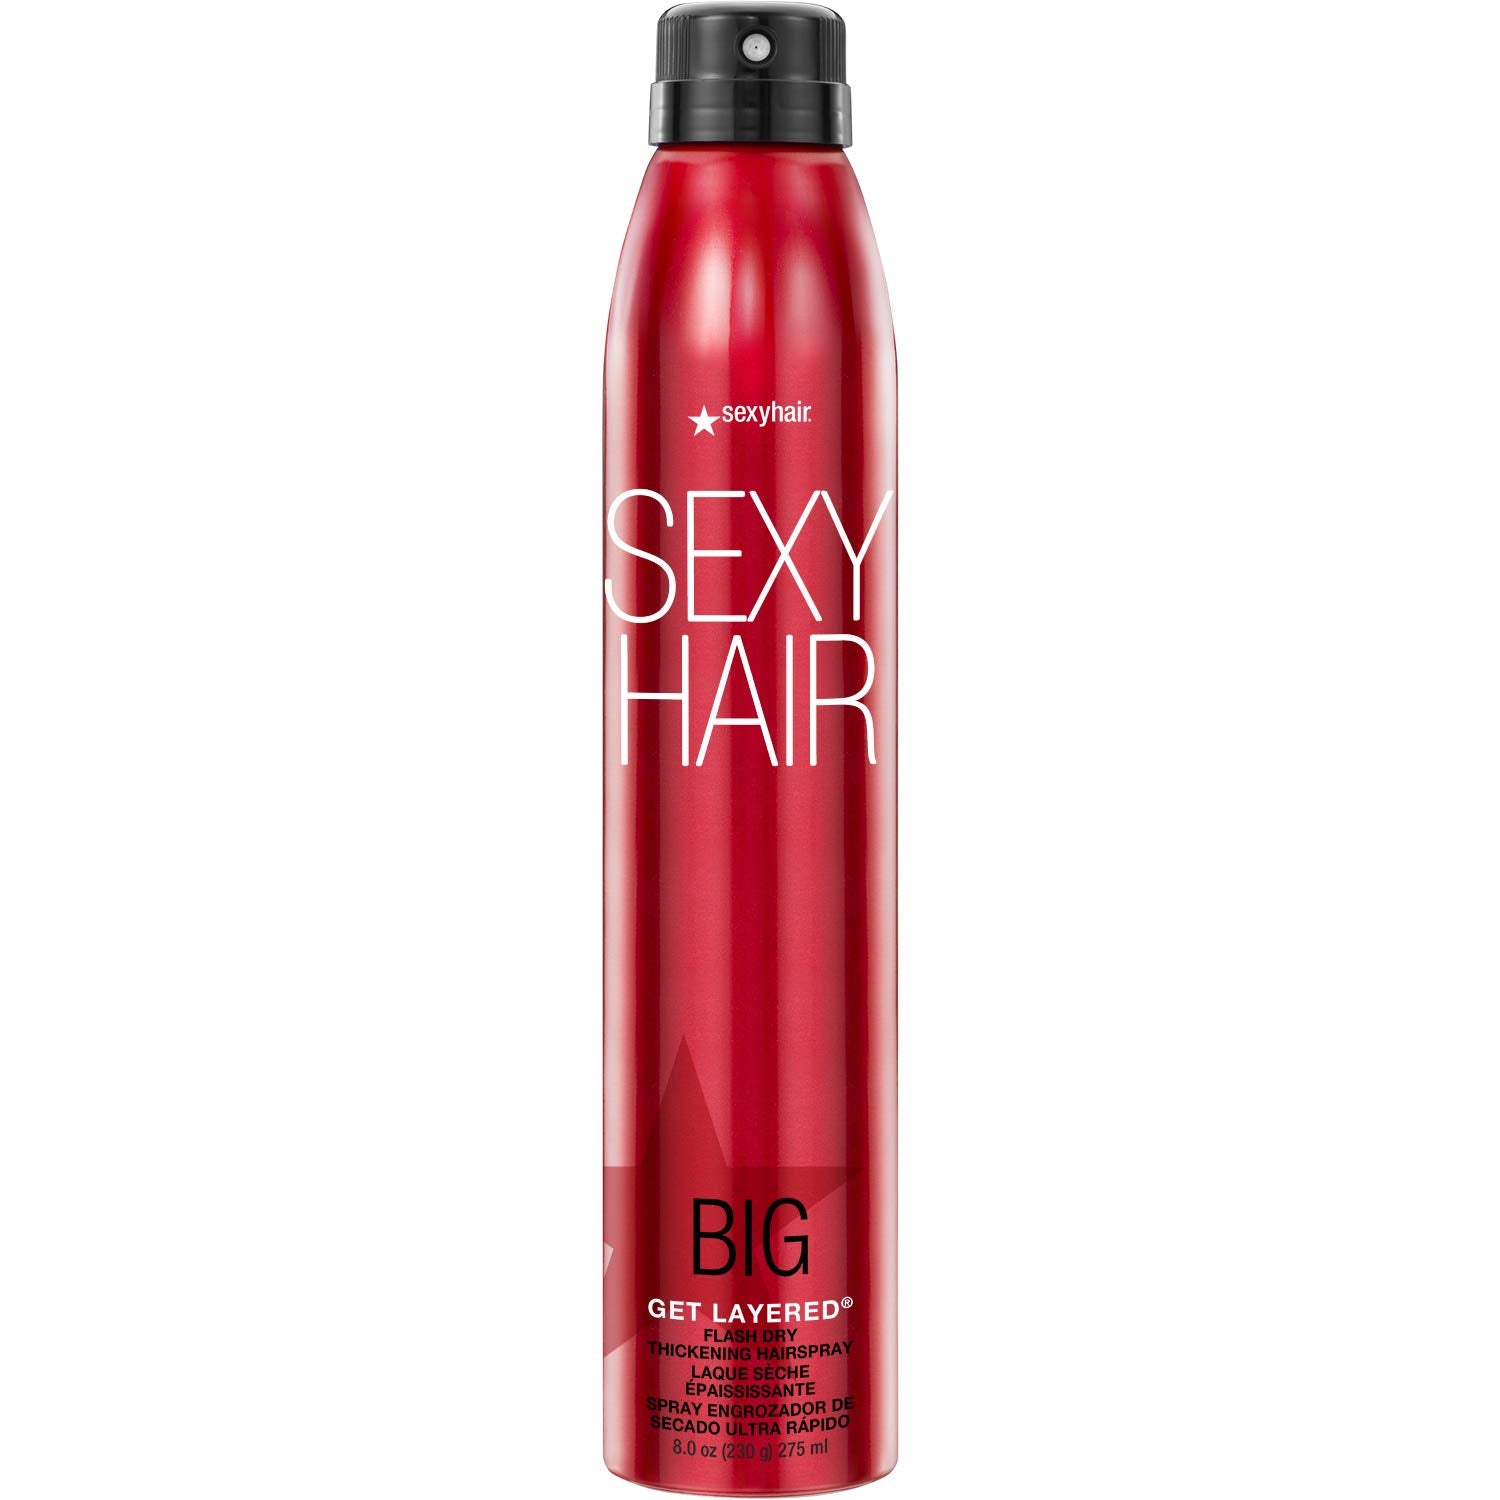 SexyHair Big Get Layered Flash Dry Thickening Hairspray - 8 oz (Buy 3 Get 1 Free Mix & Match)